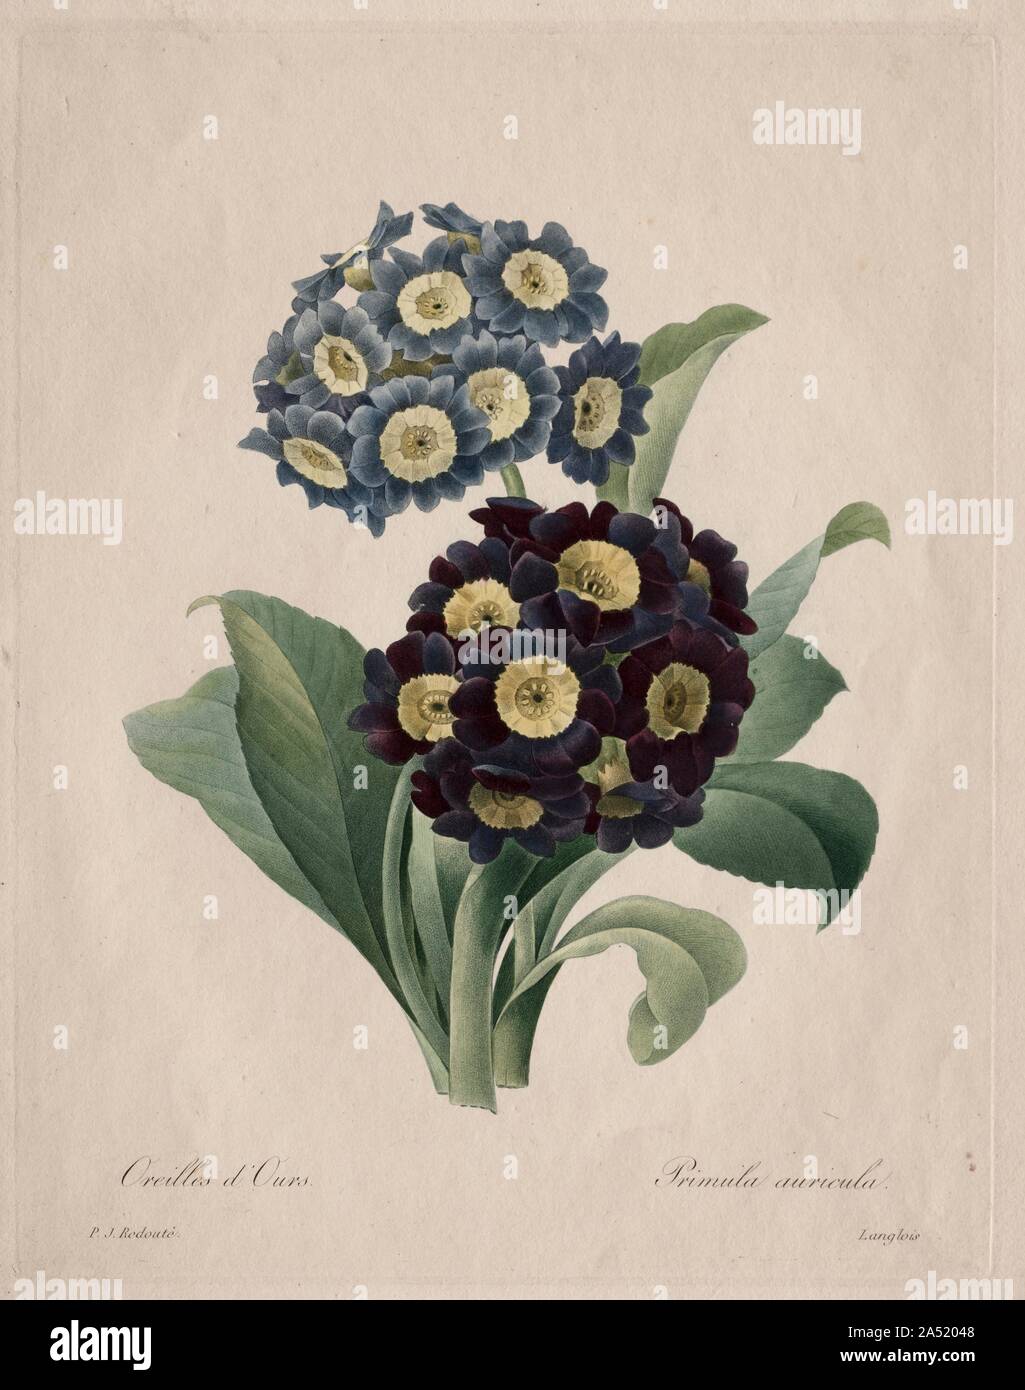 Primula auricula, 1827. Stock Photo